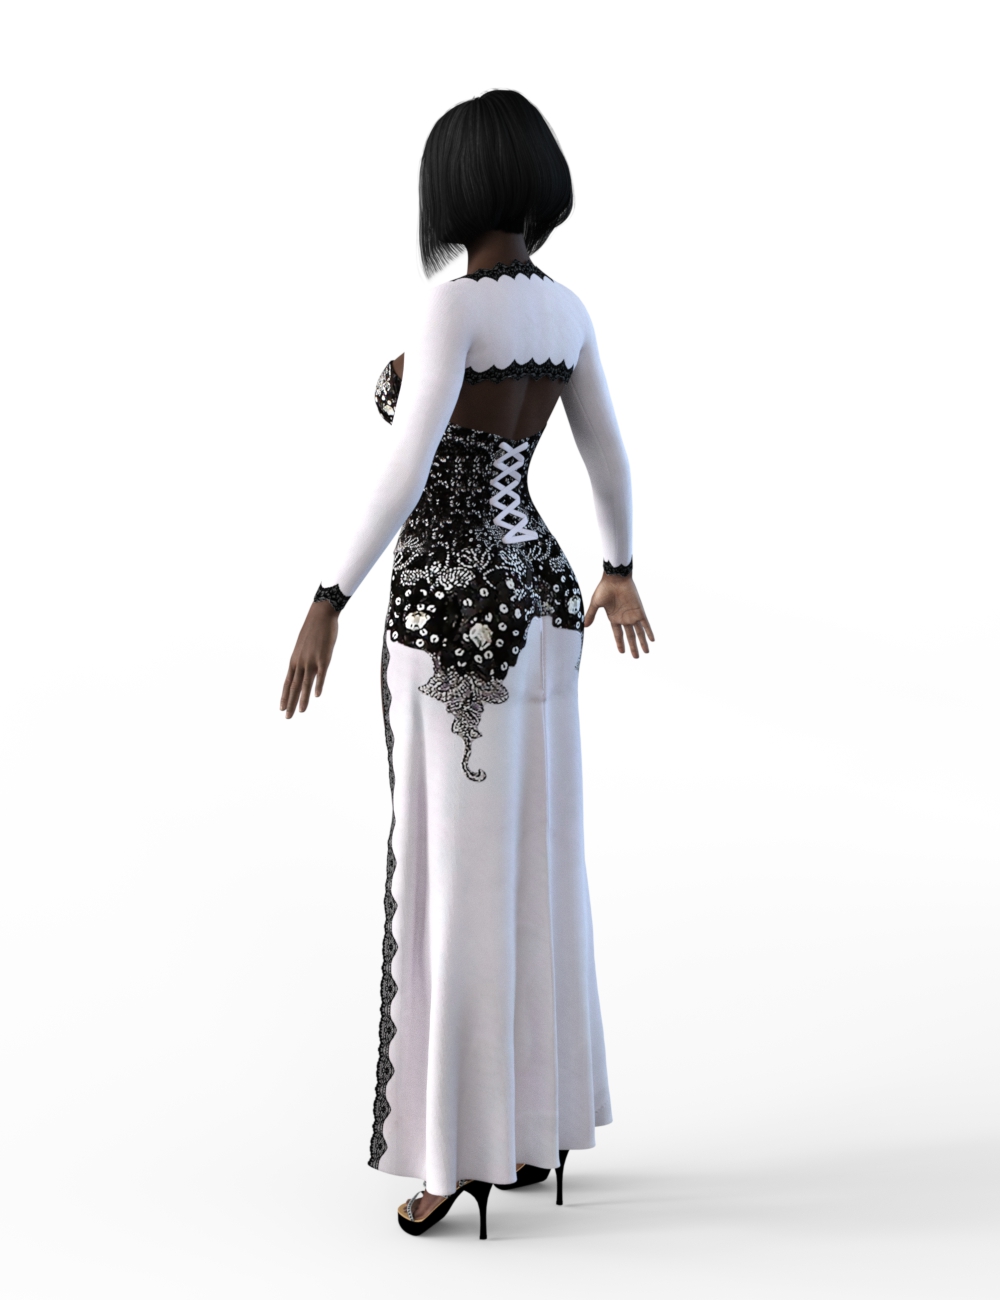 FBX- Lynsey Corset Dress by: Paleo, 3D Models by Daz 3D